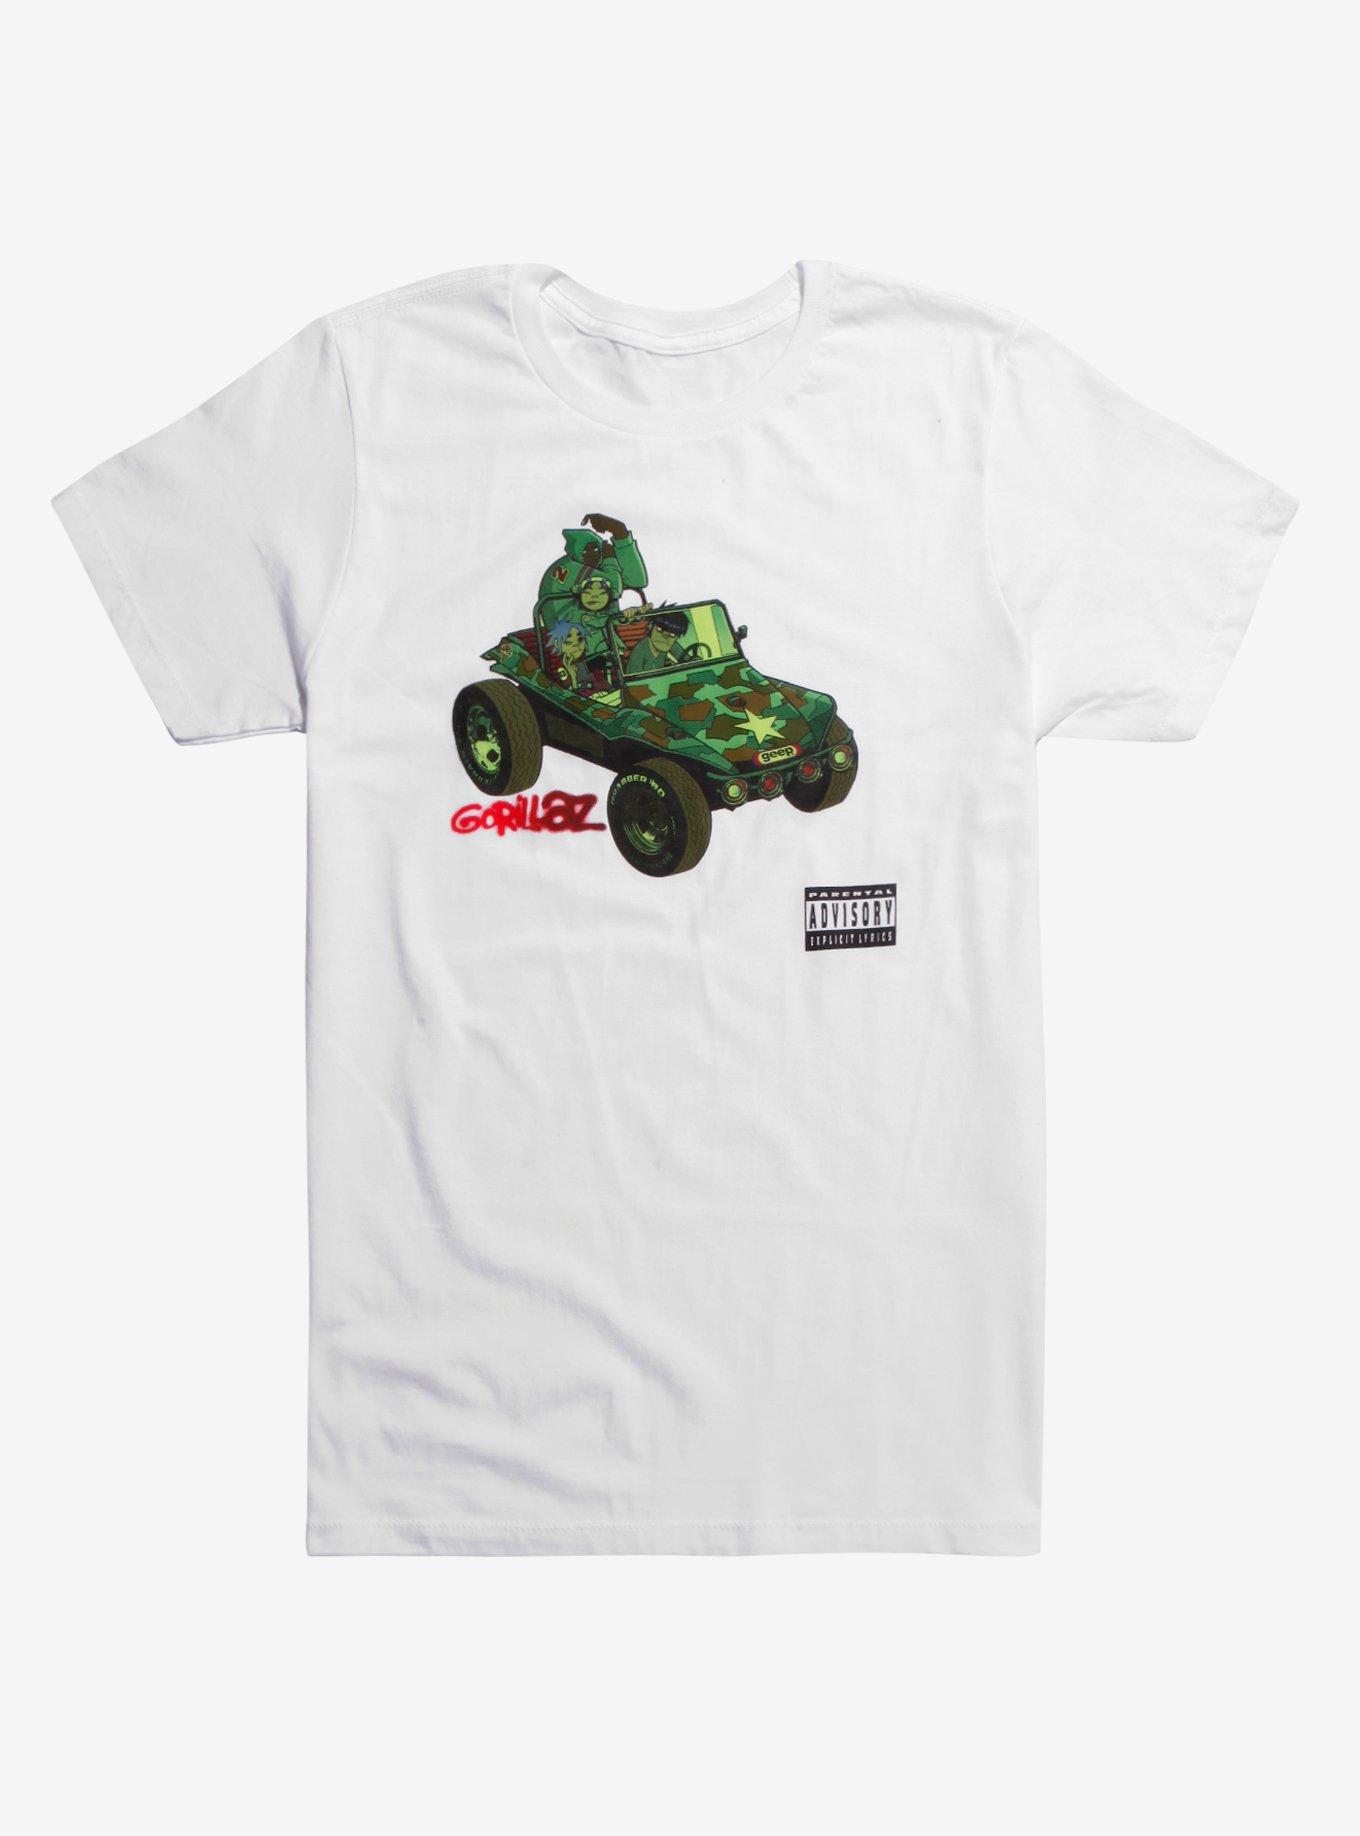 Gorillaz Self-Titled Album T-Shirt, WHITE, hi-res